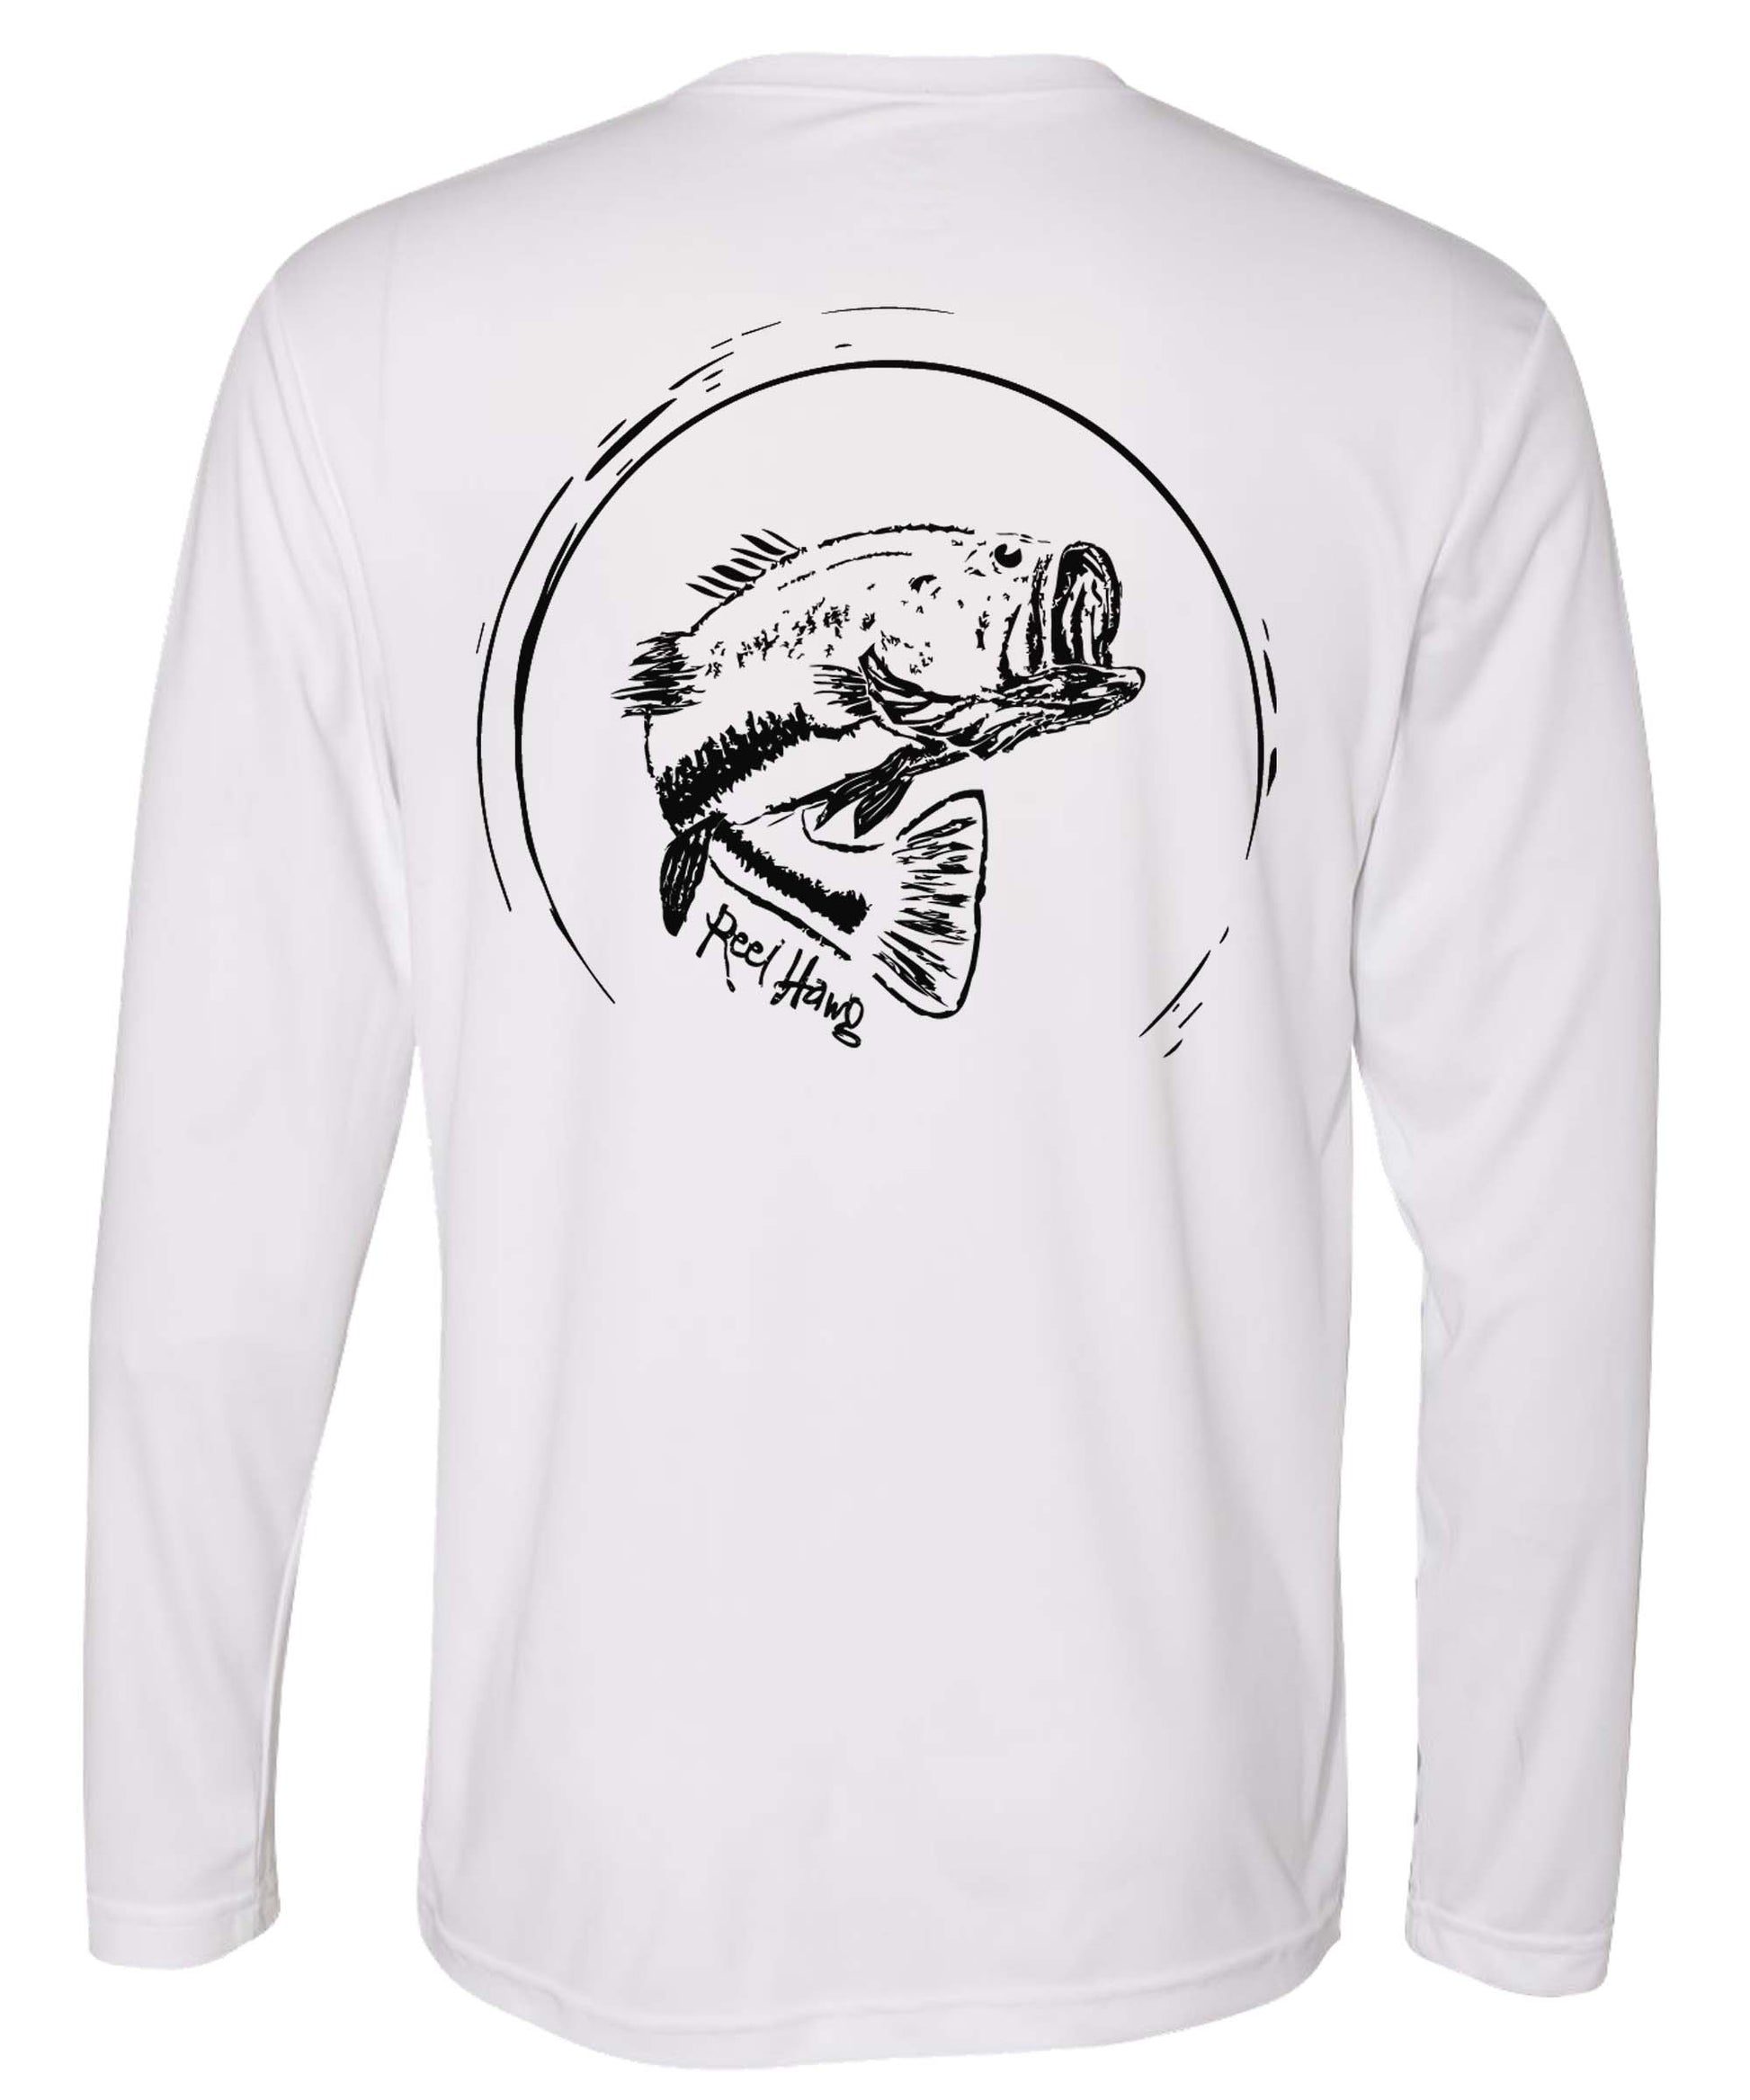 Bass Fishing Shirt, Bass Performance 50UV Sun Protection Shirt